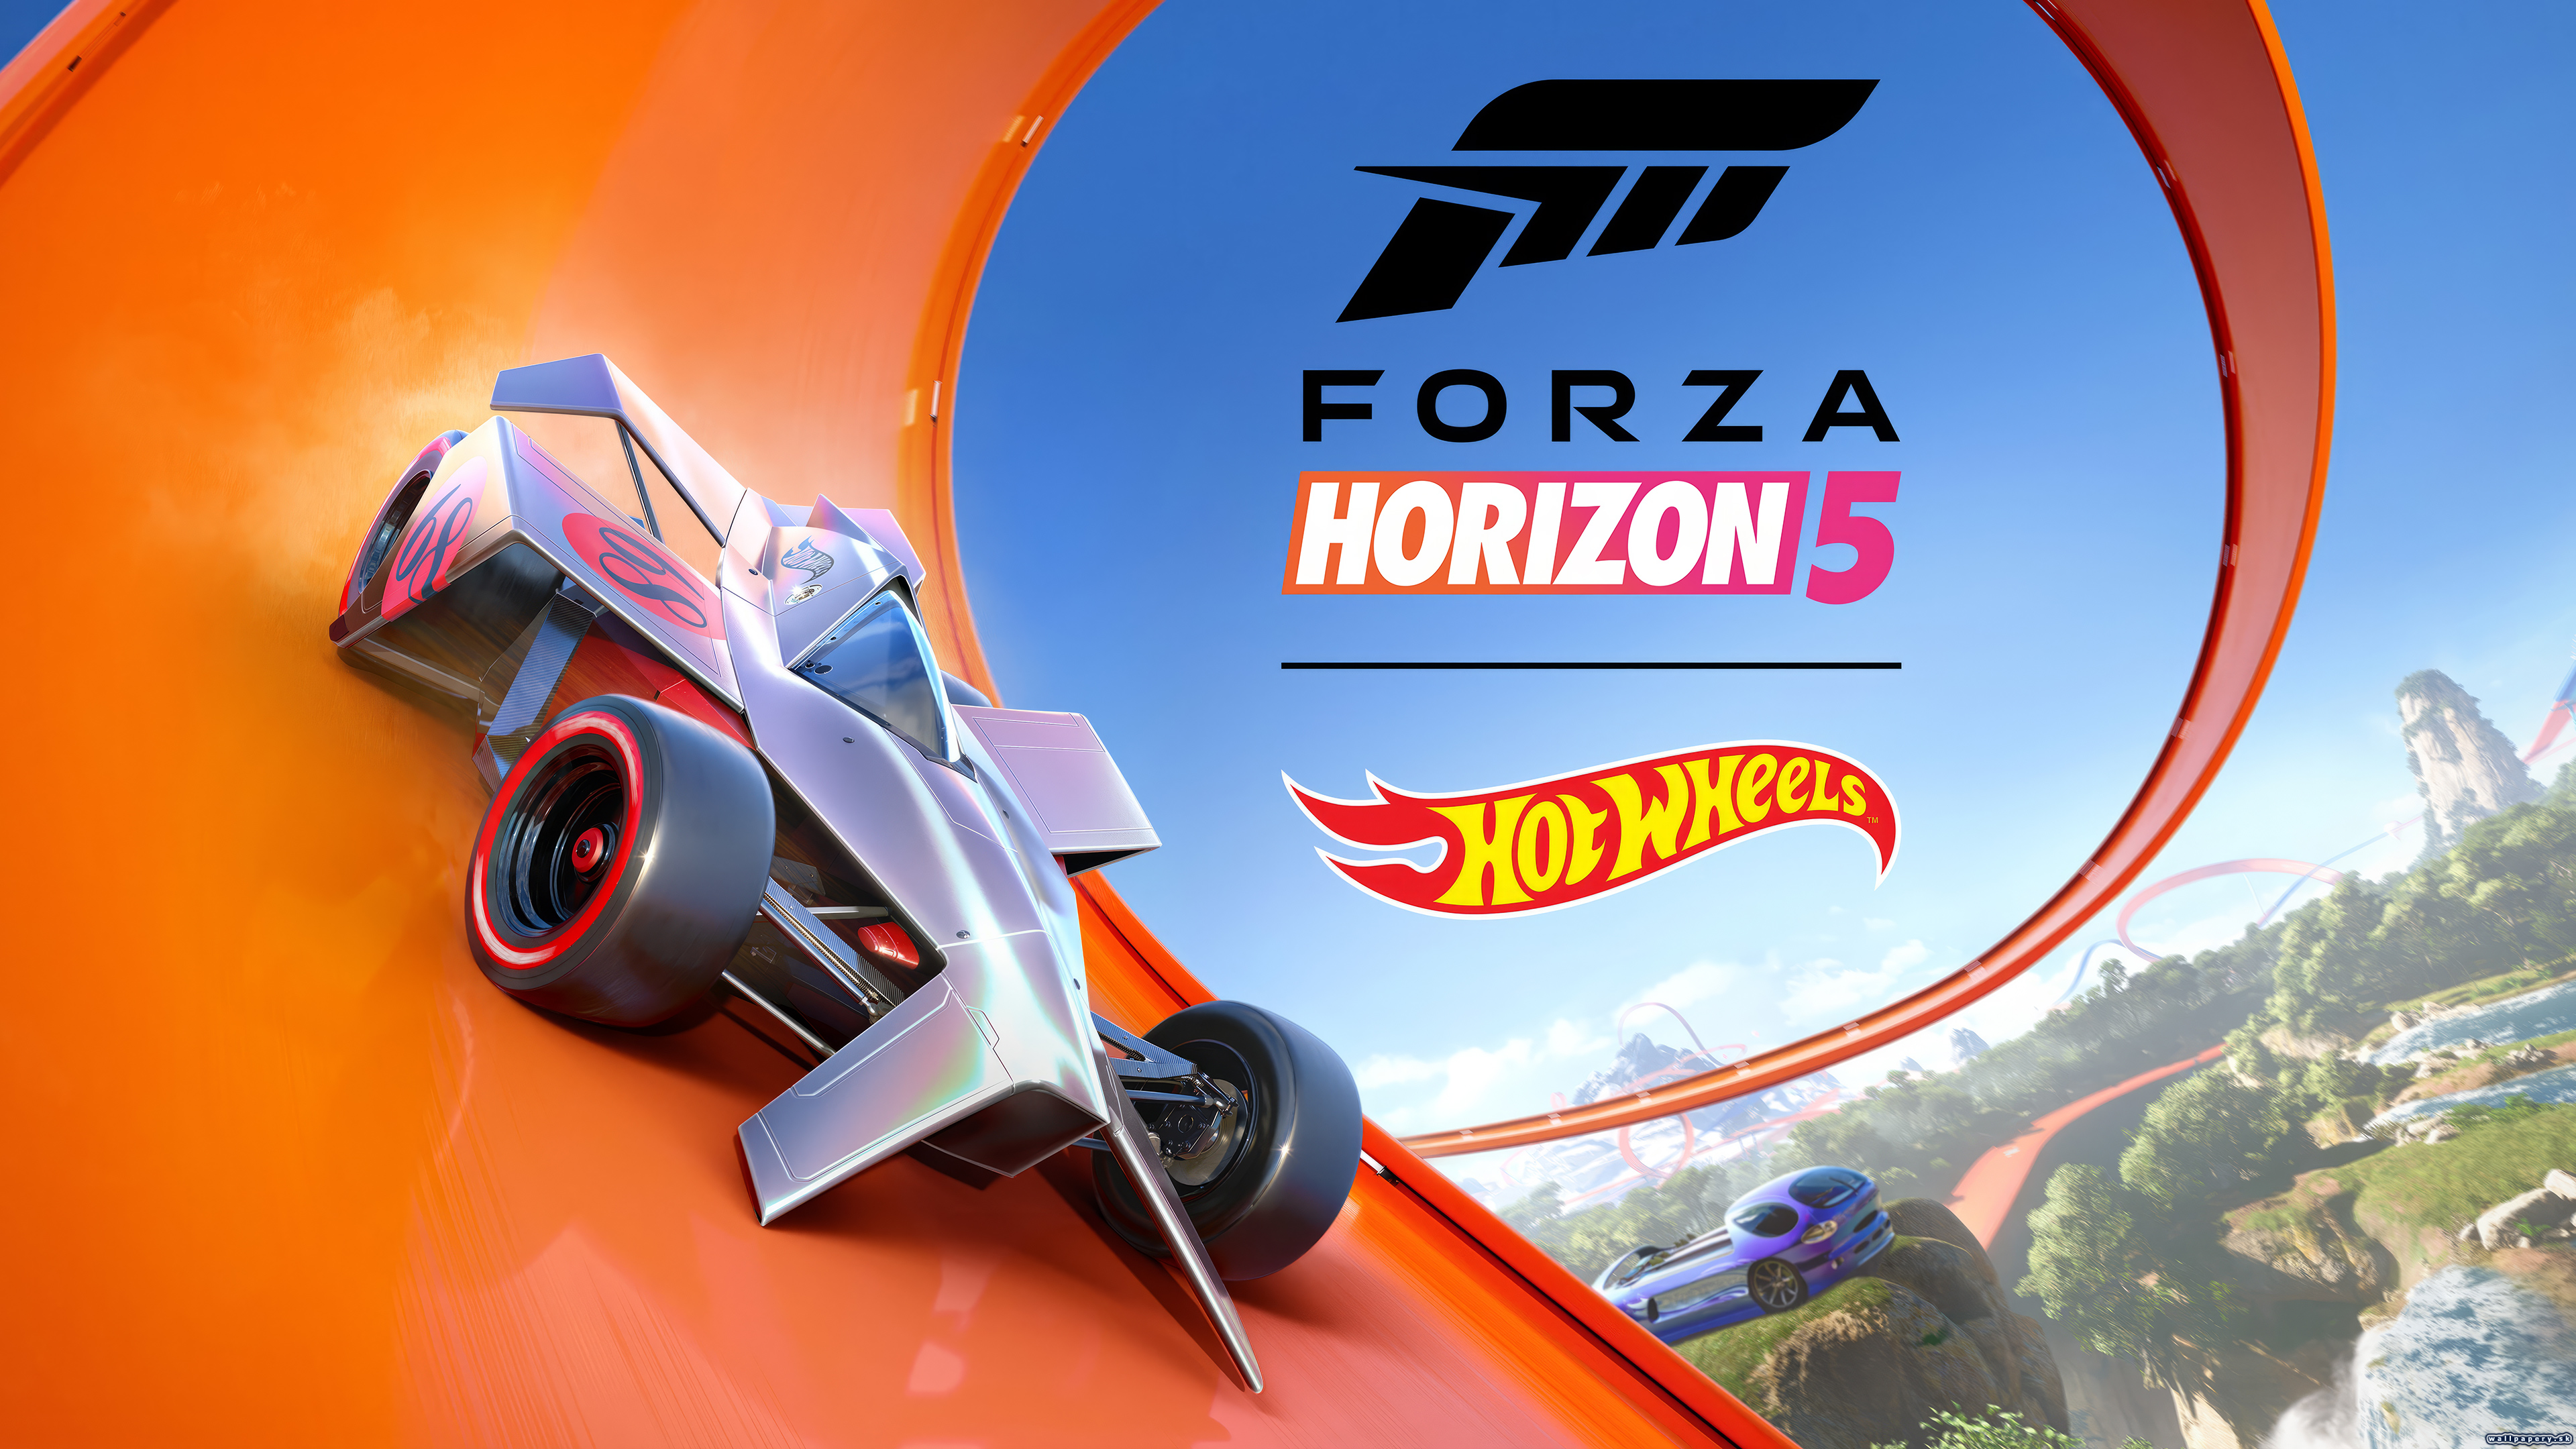 Forza Horizon 5: Hot Wheels - wallpaper 1